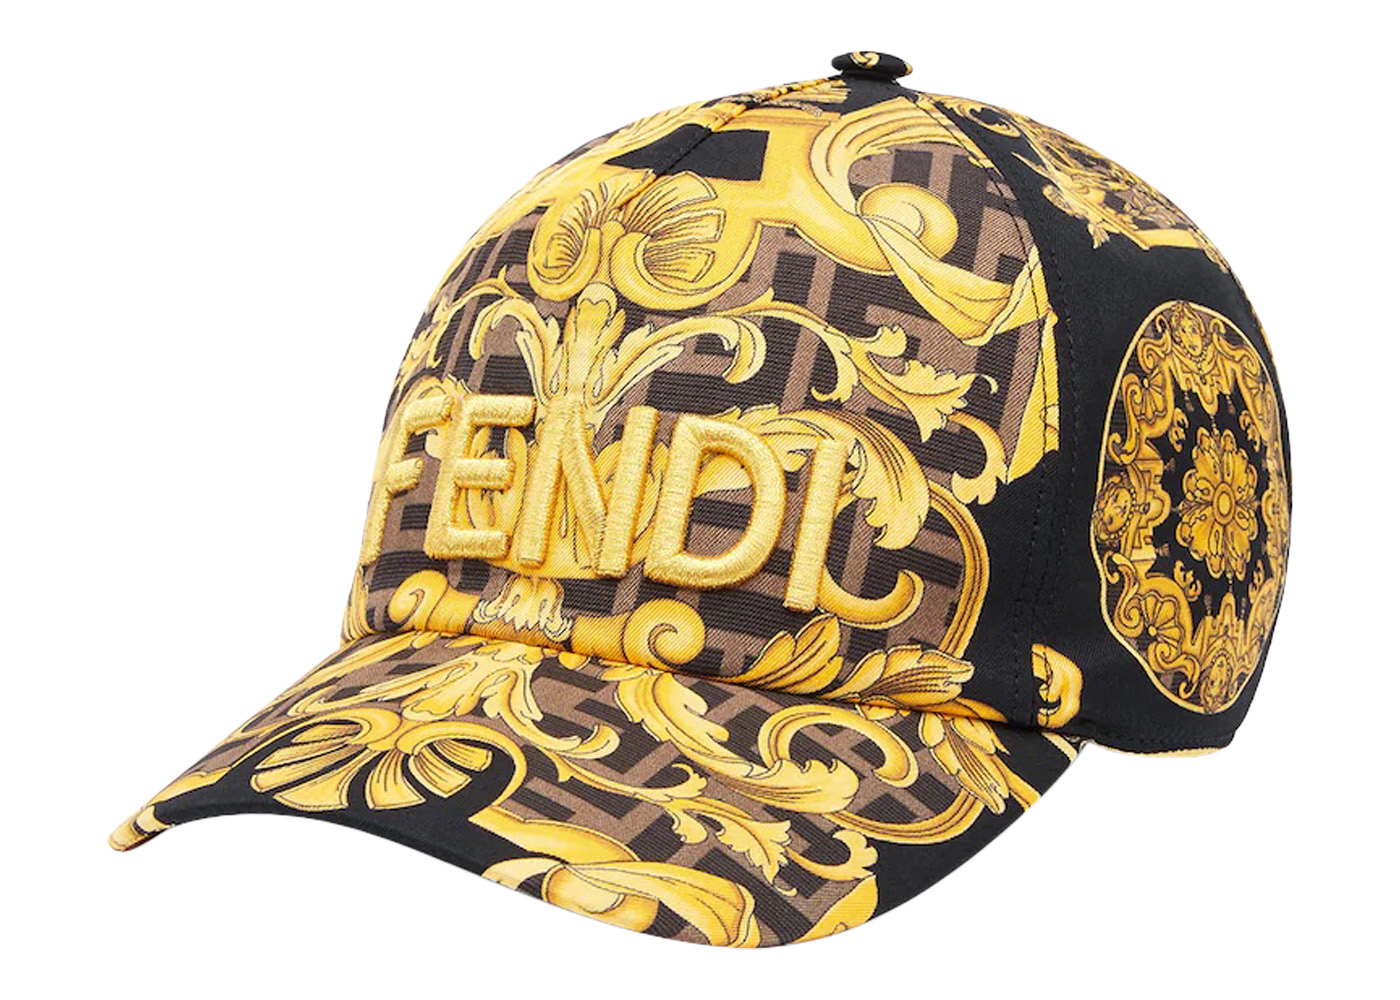 Fendi Fendace Silk Baseball Cap Black/Multicolor in Silk with Gold